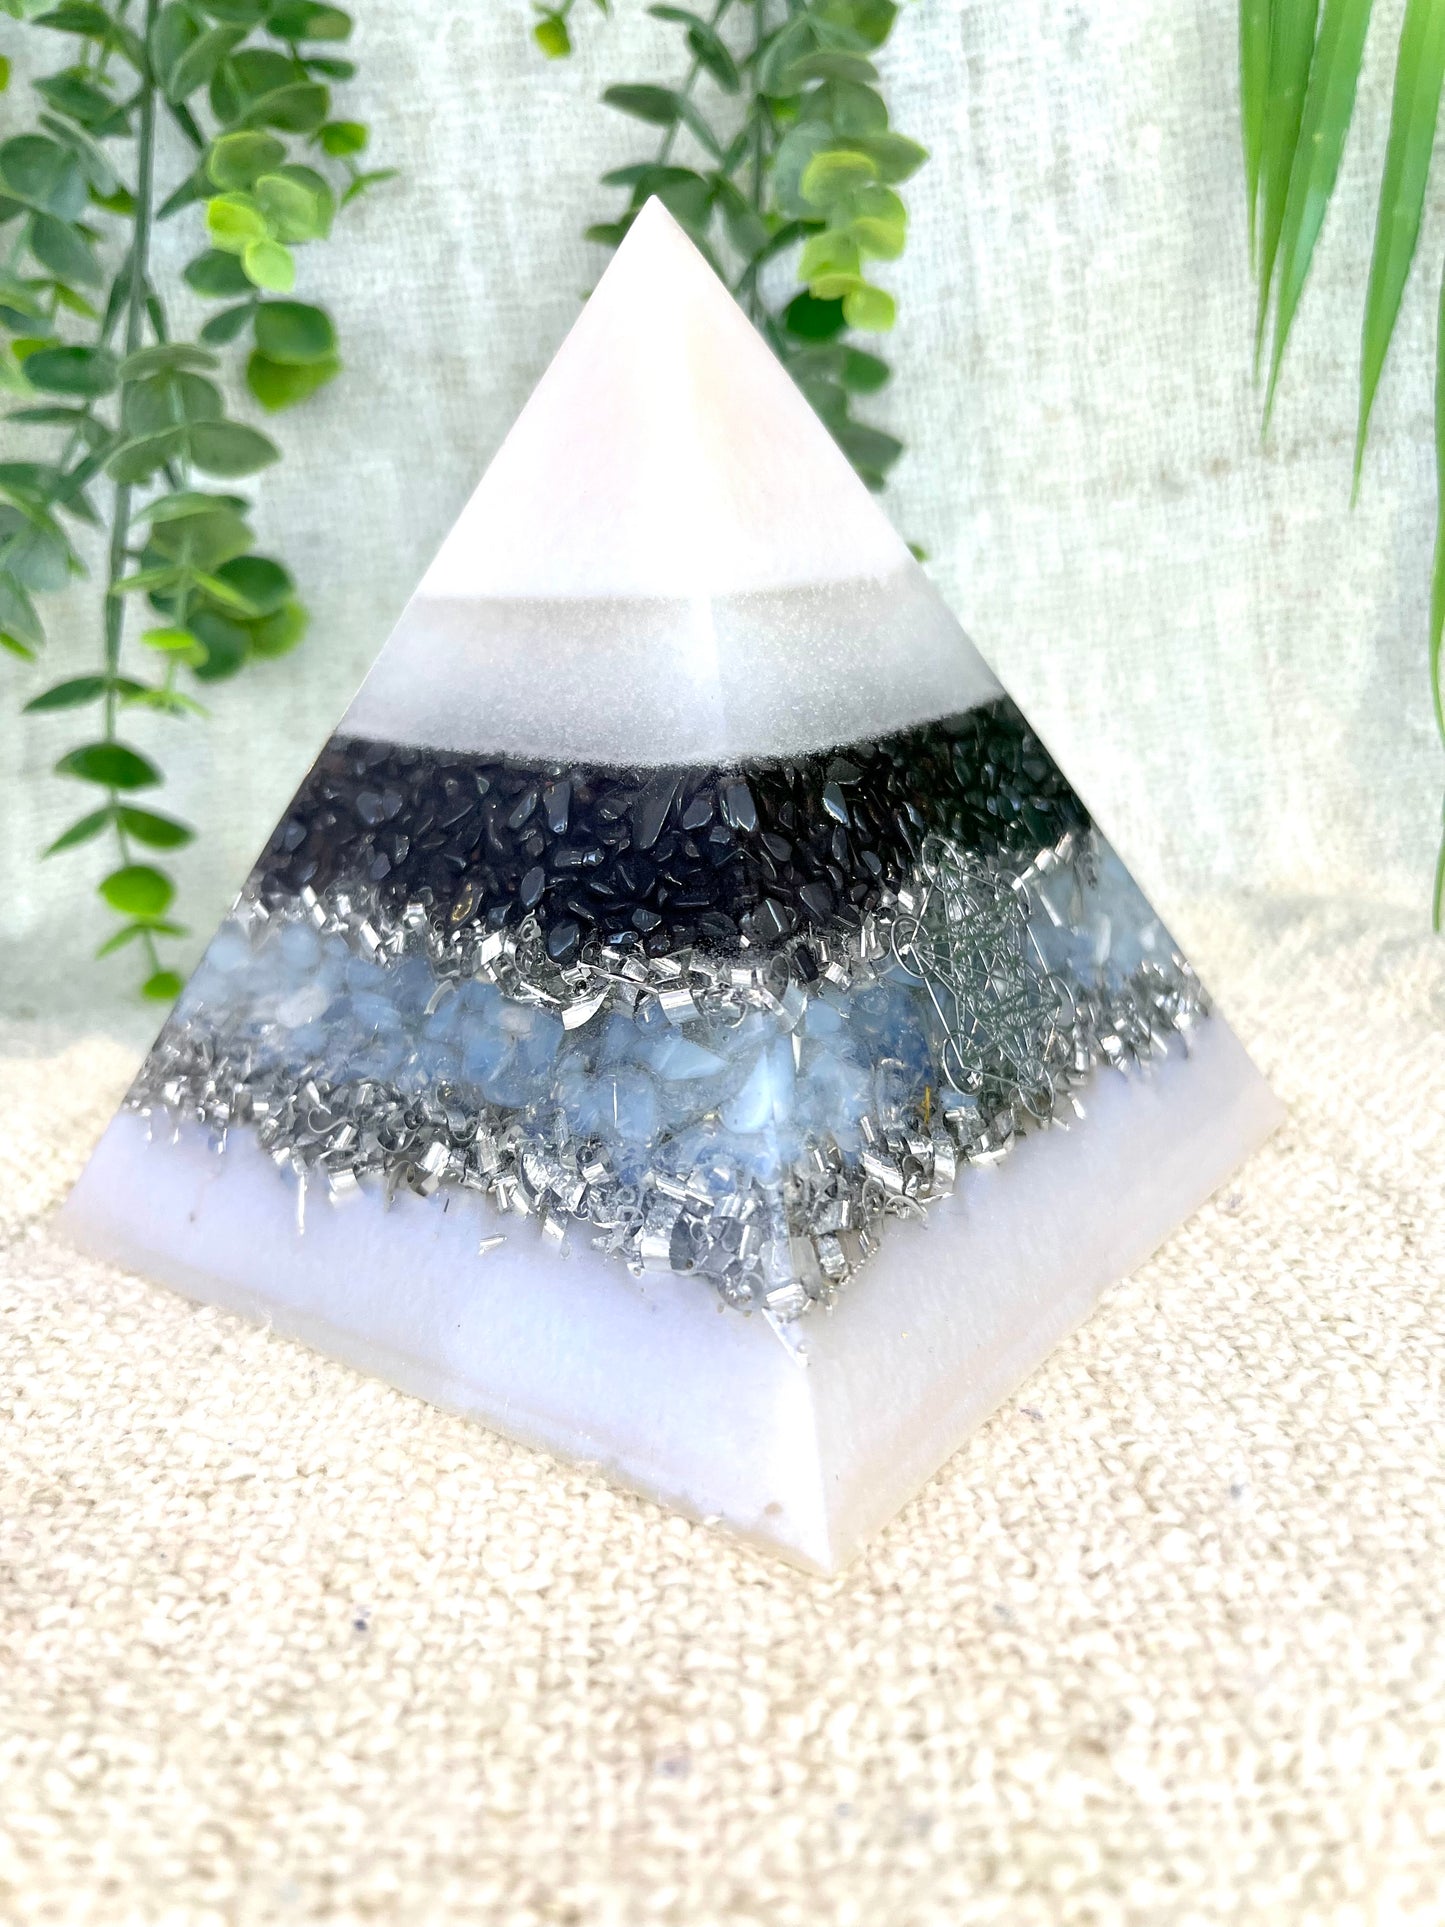 LIAM - Orgonite Pyramid - EMF Protector - Hematite, Opalite and Aluminum Metals